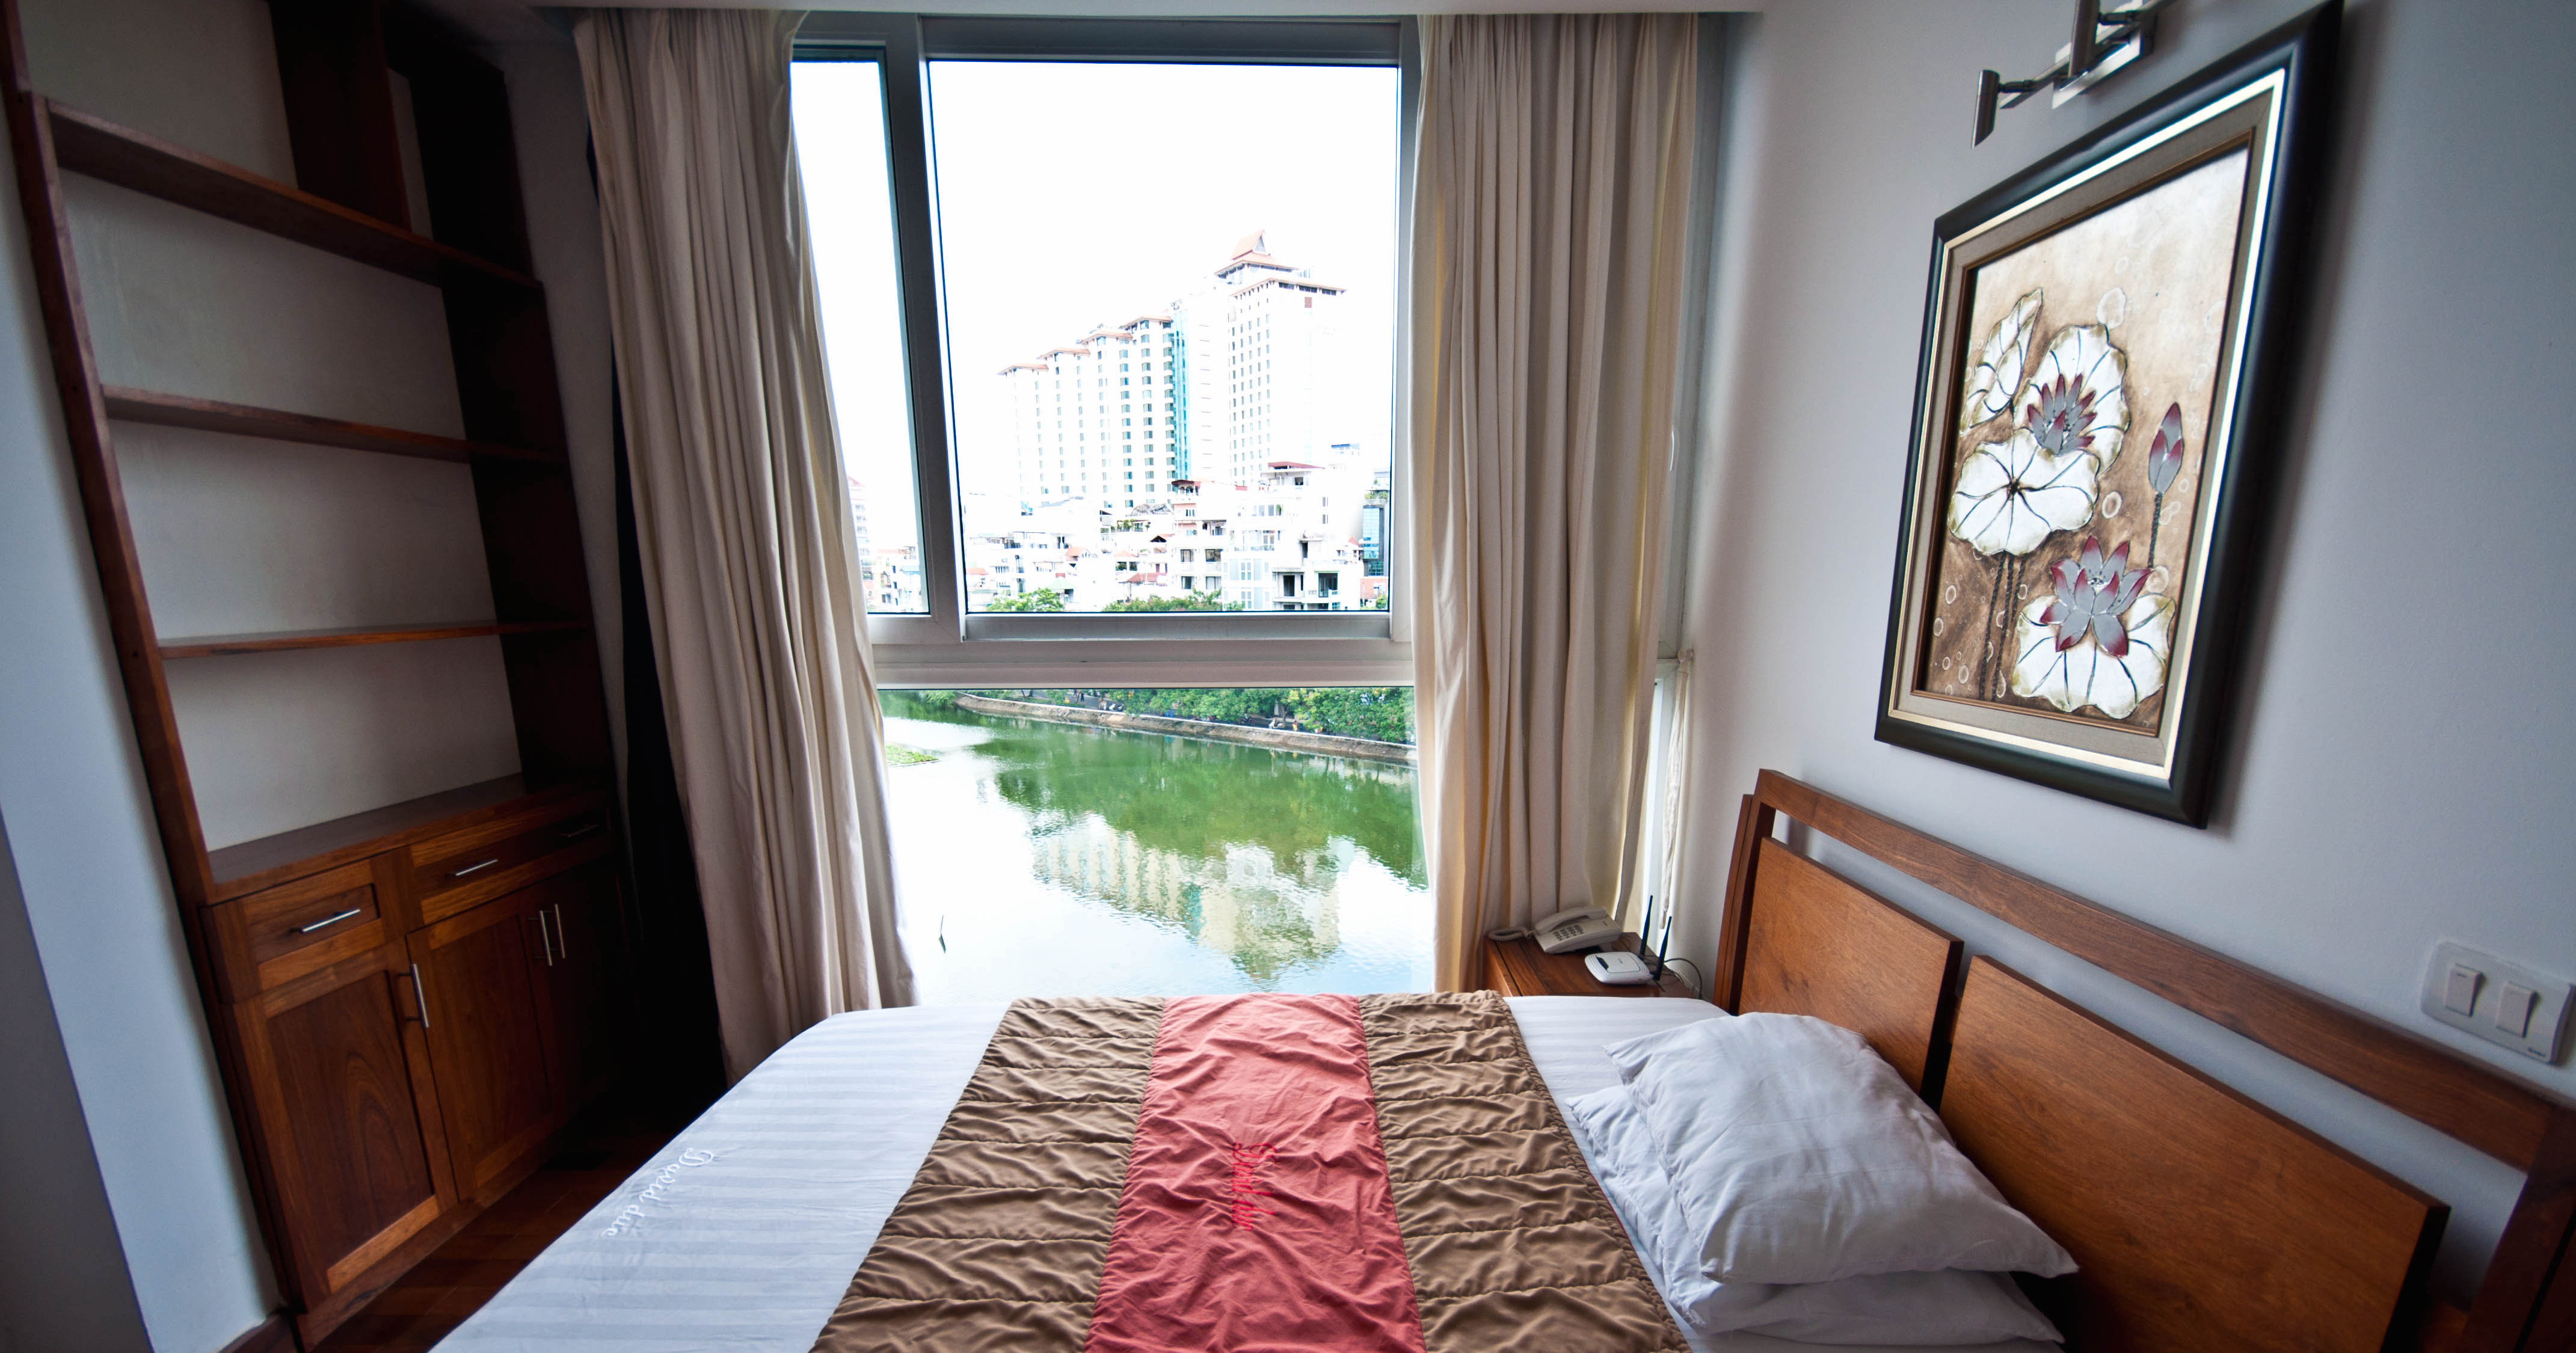 4 bedrooms unit in P2, Ciputra, Bac Tu Liem, Hanoi for lease